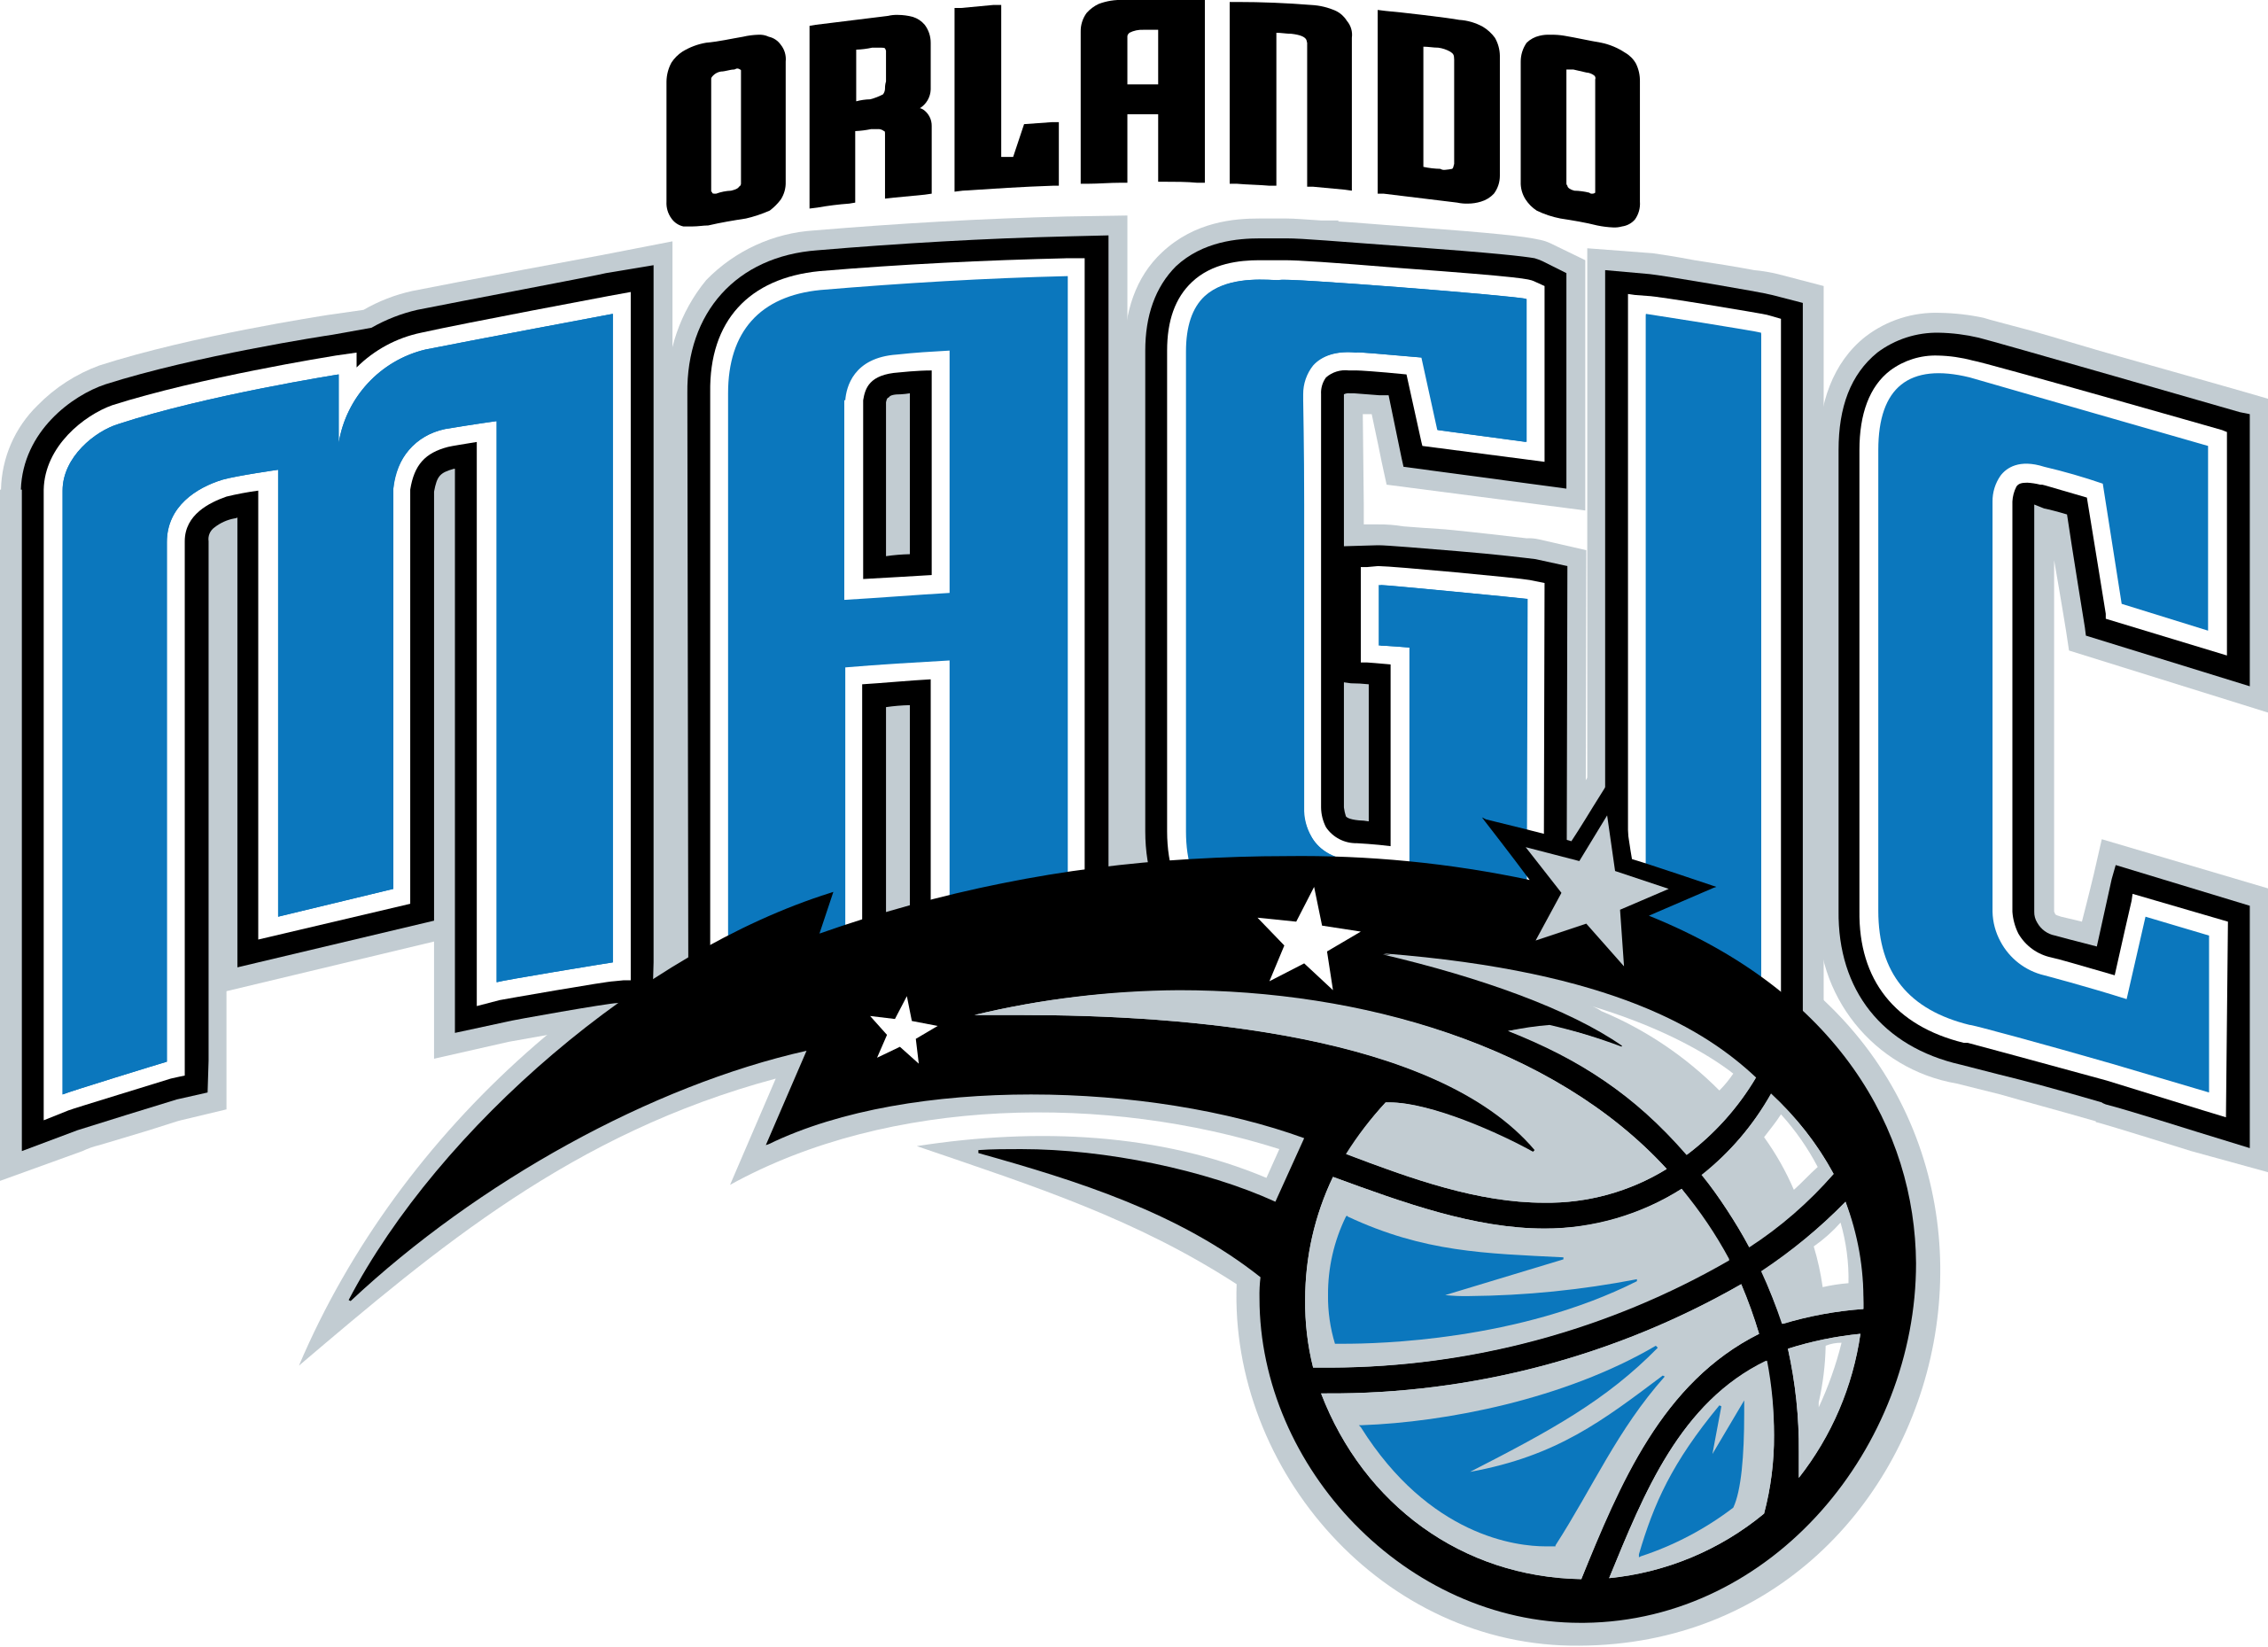 Orlando Magic Basketball Wiki Fandom powered by Wikia